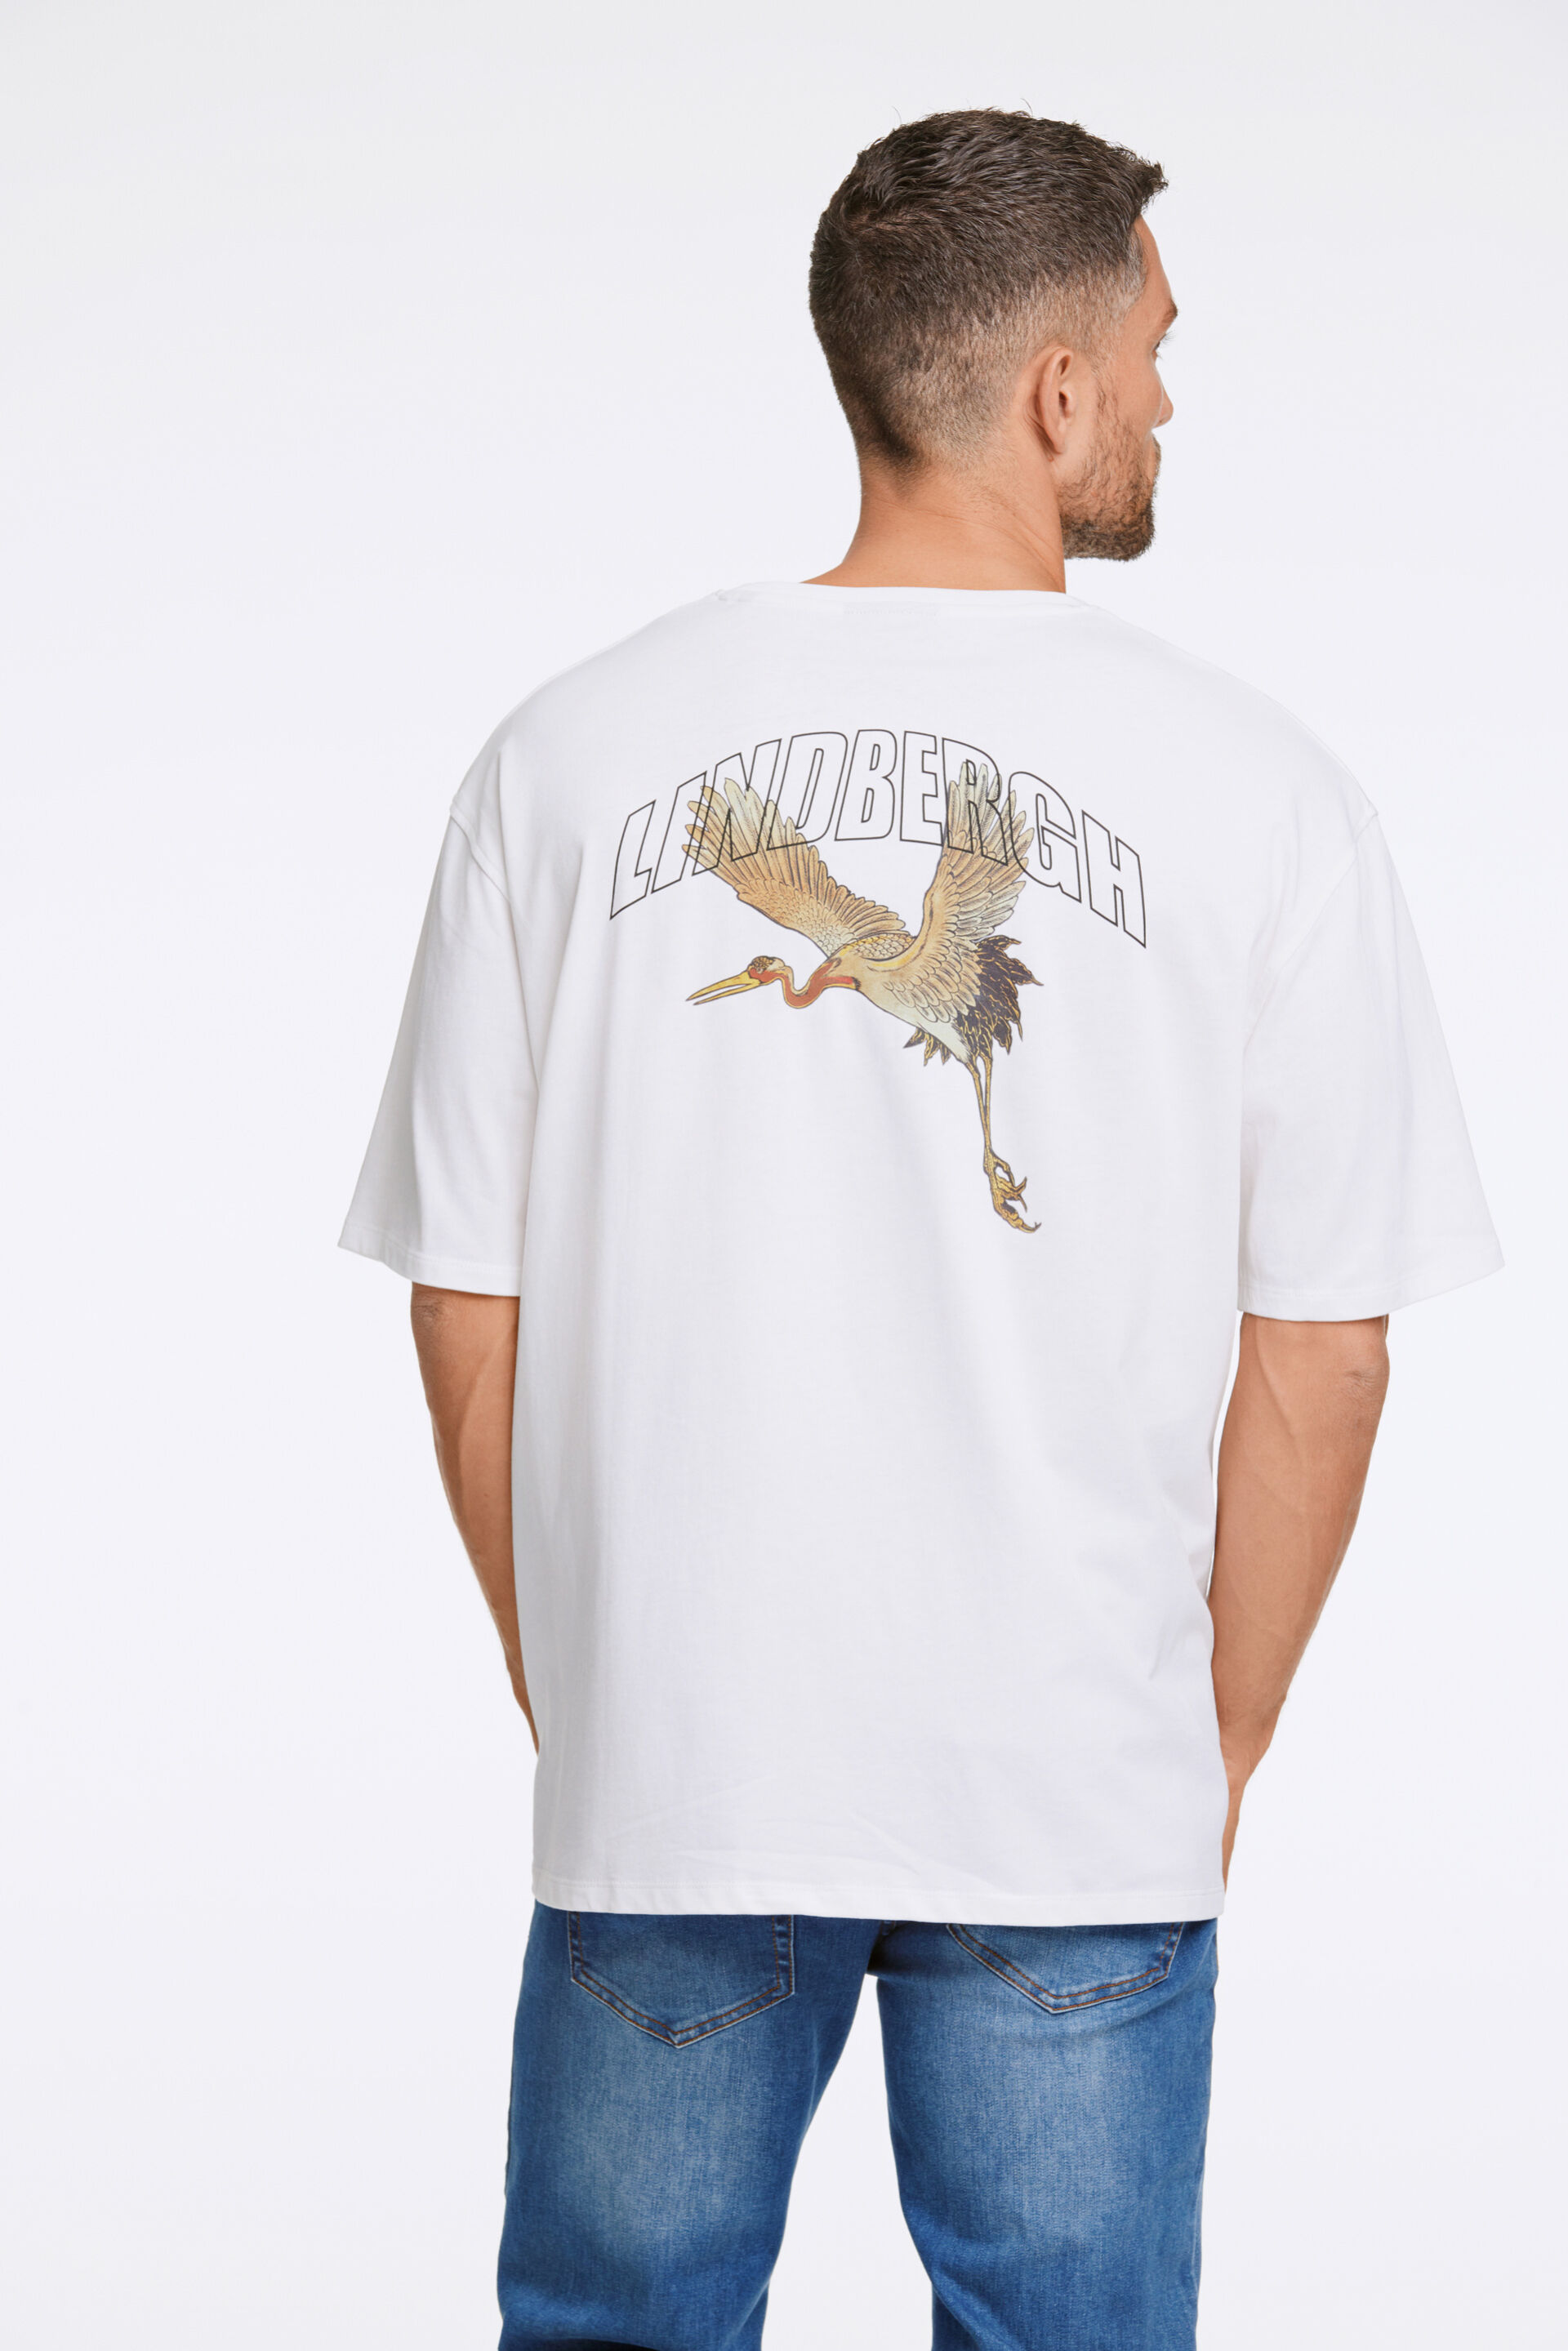 Lindbergh  T-shirt 30-422050